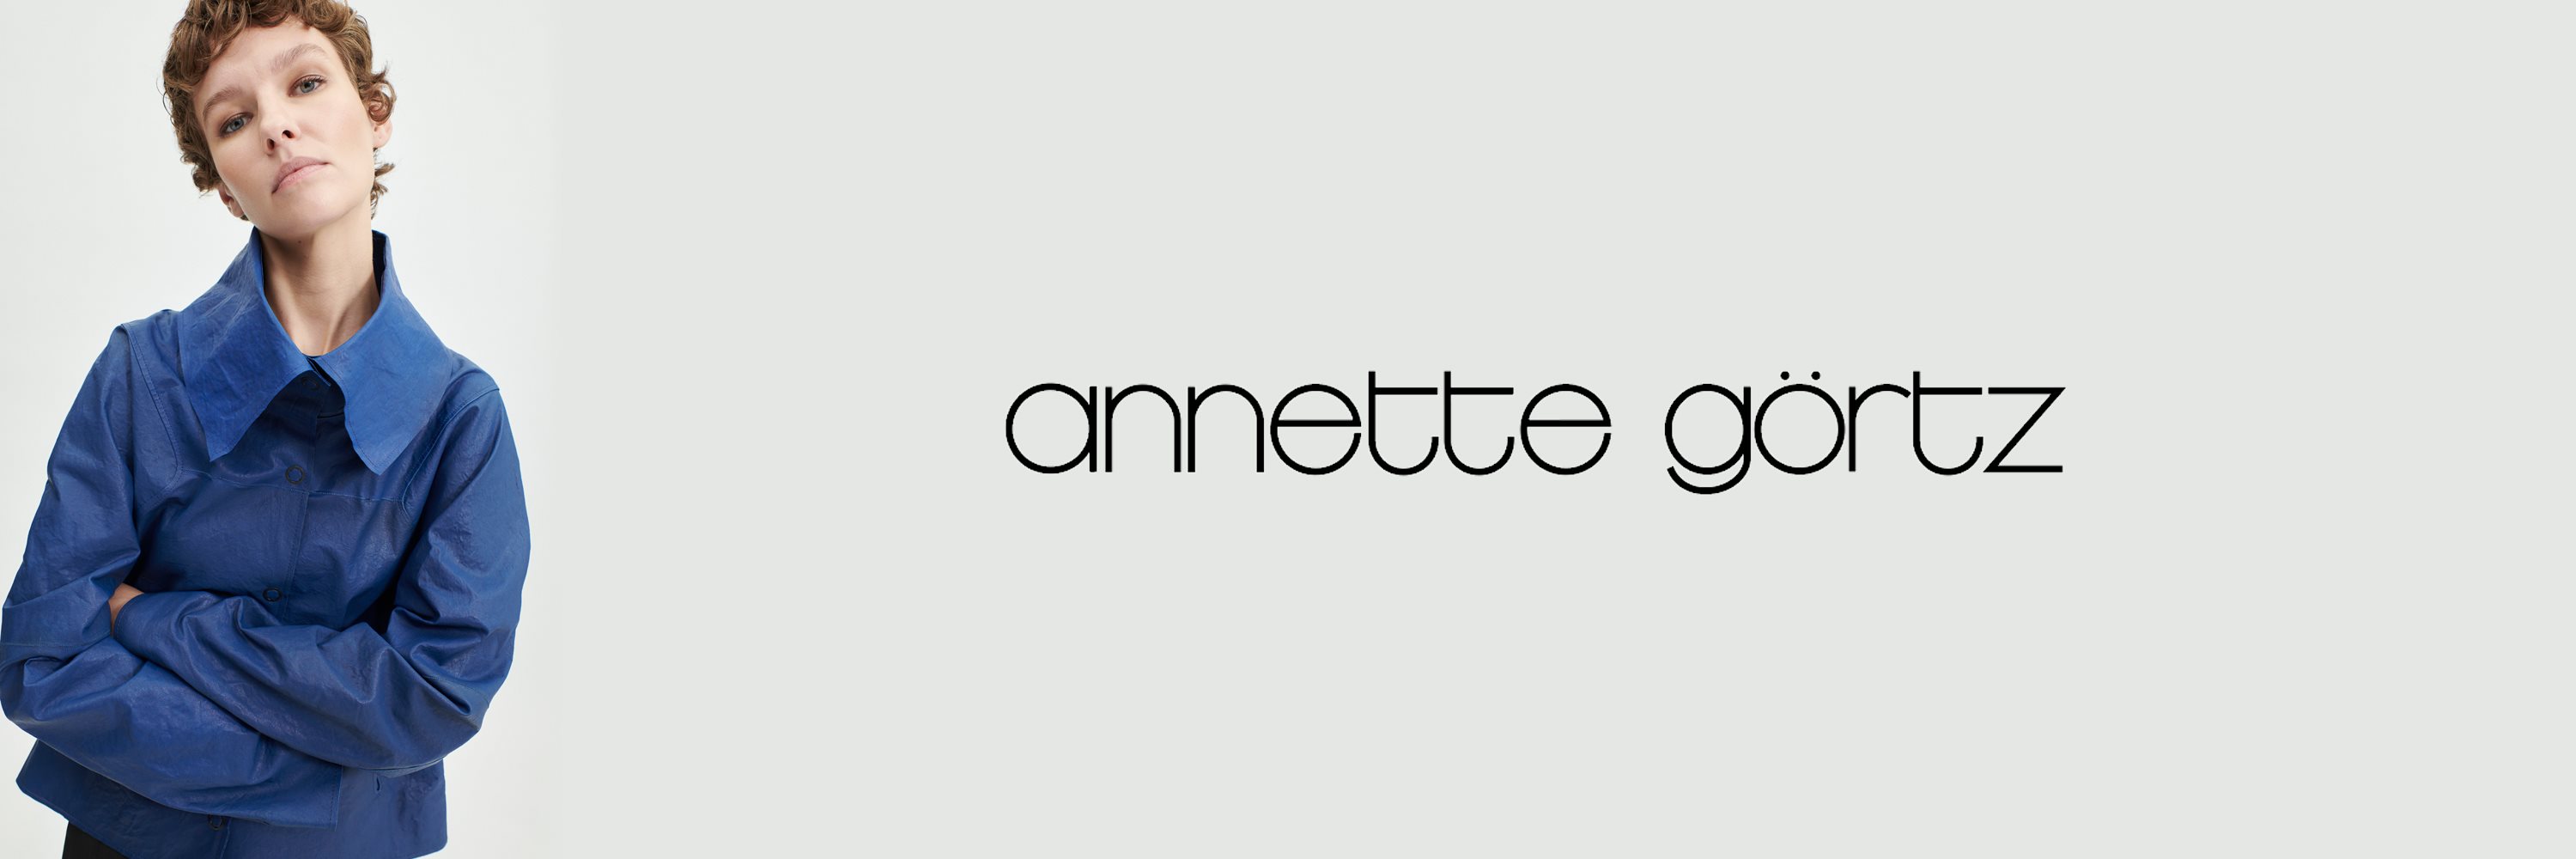 ANNETTE GORTZ